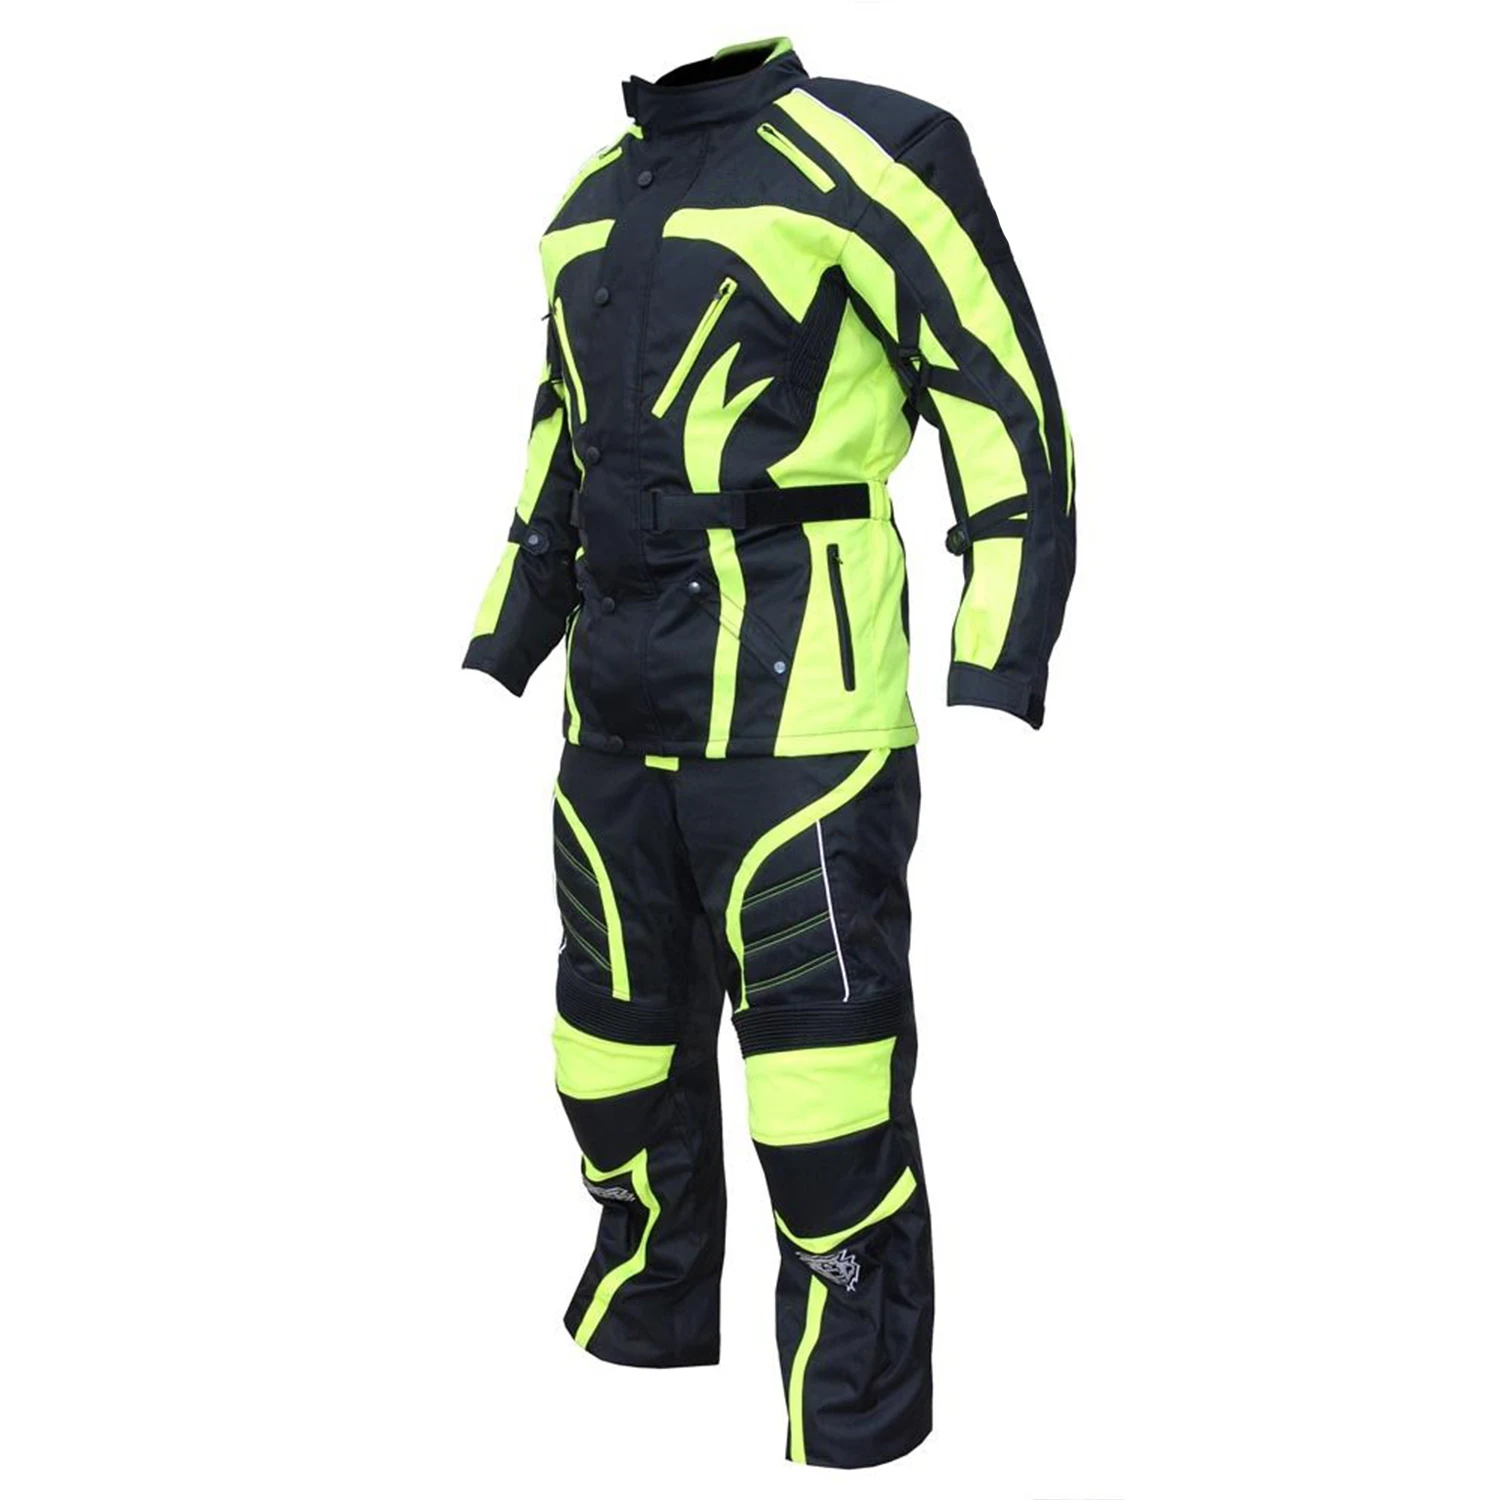 Textile motorbike suit, Cordura motorcycle suit